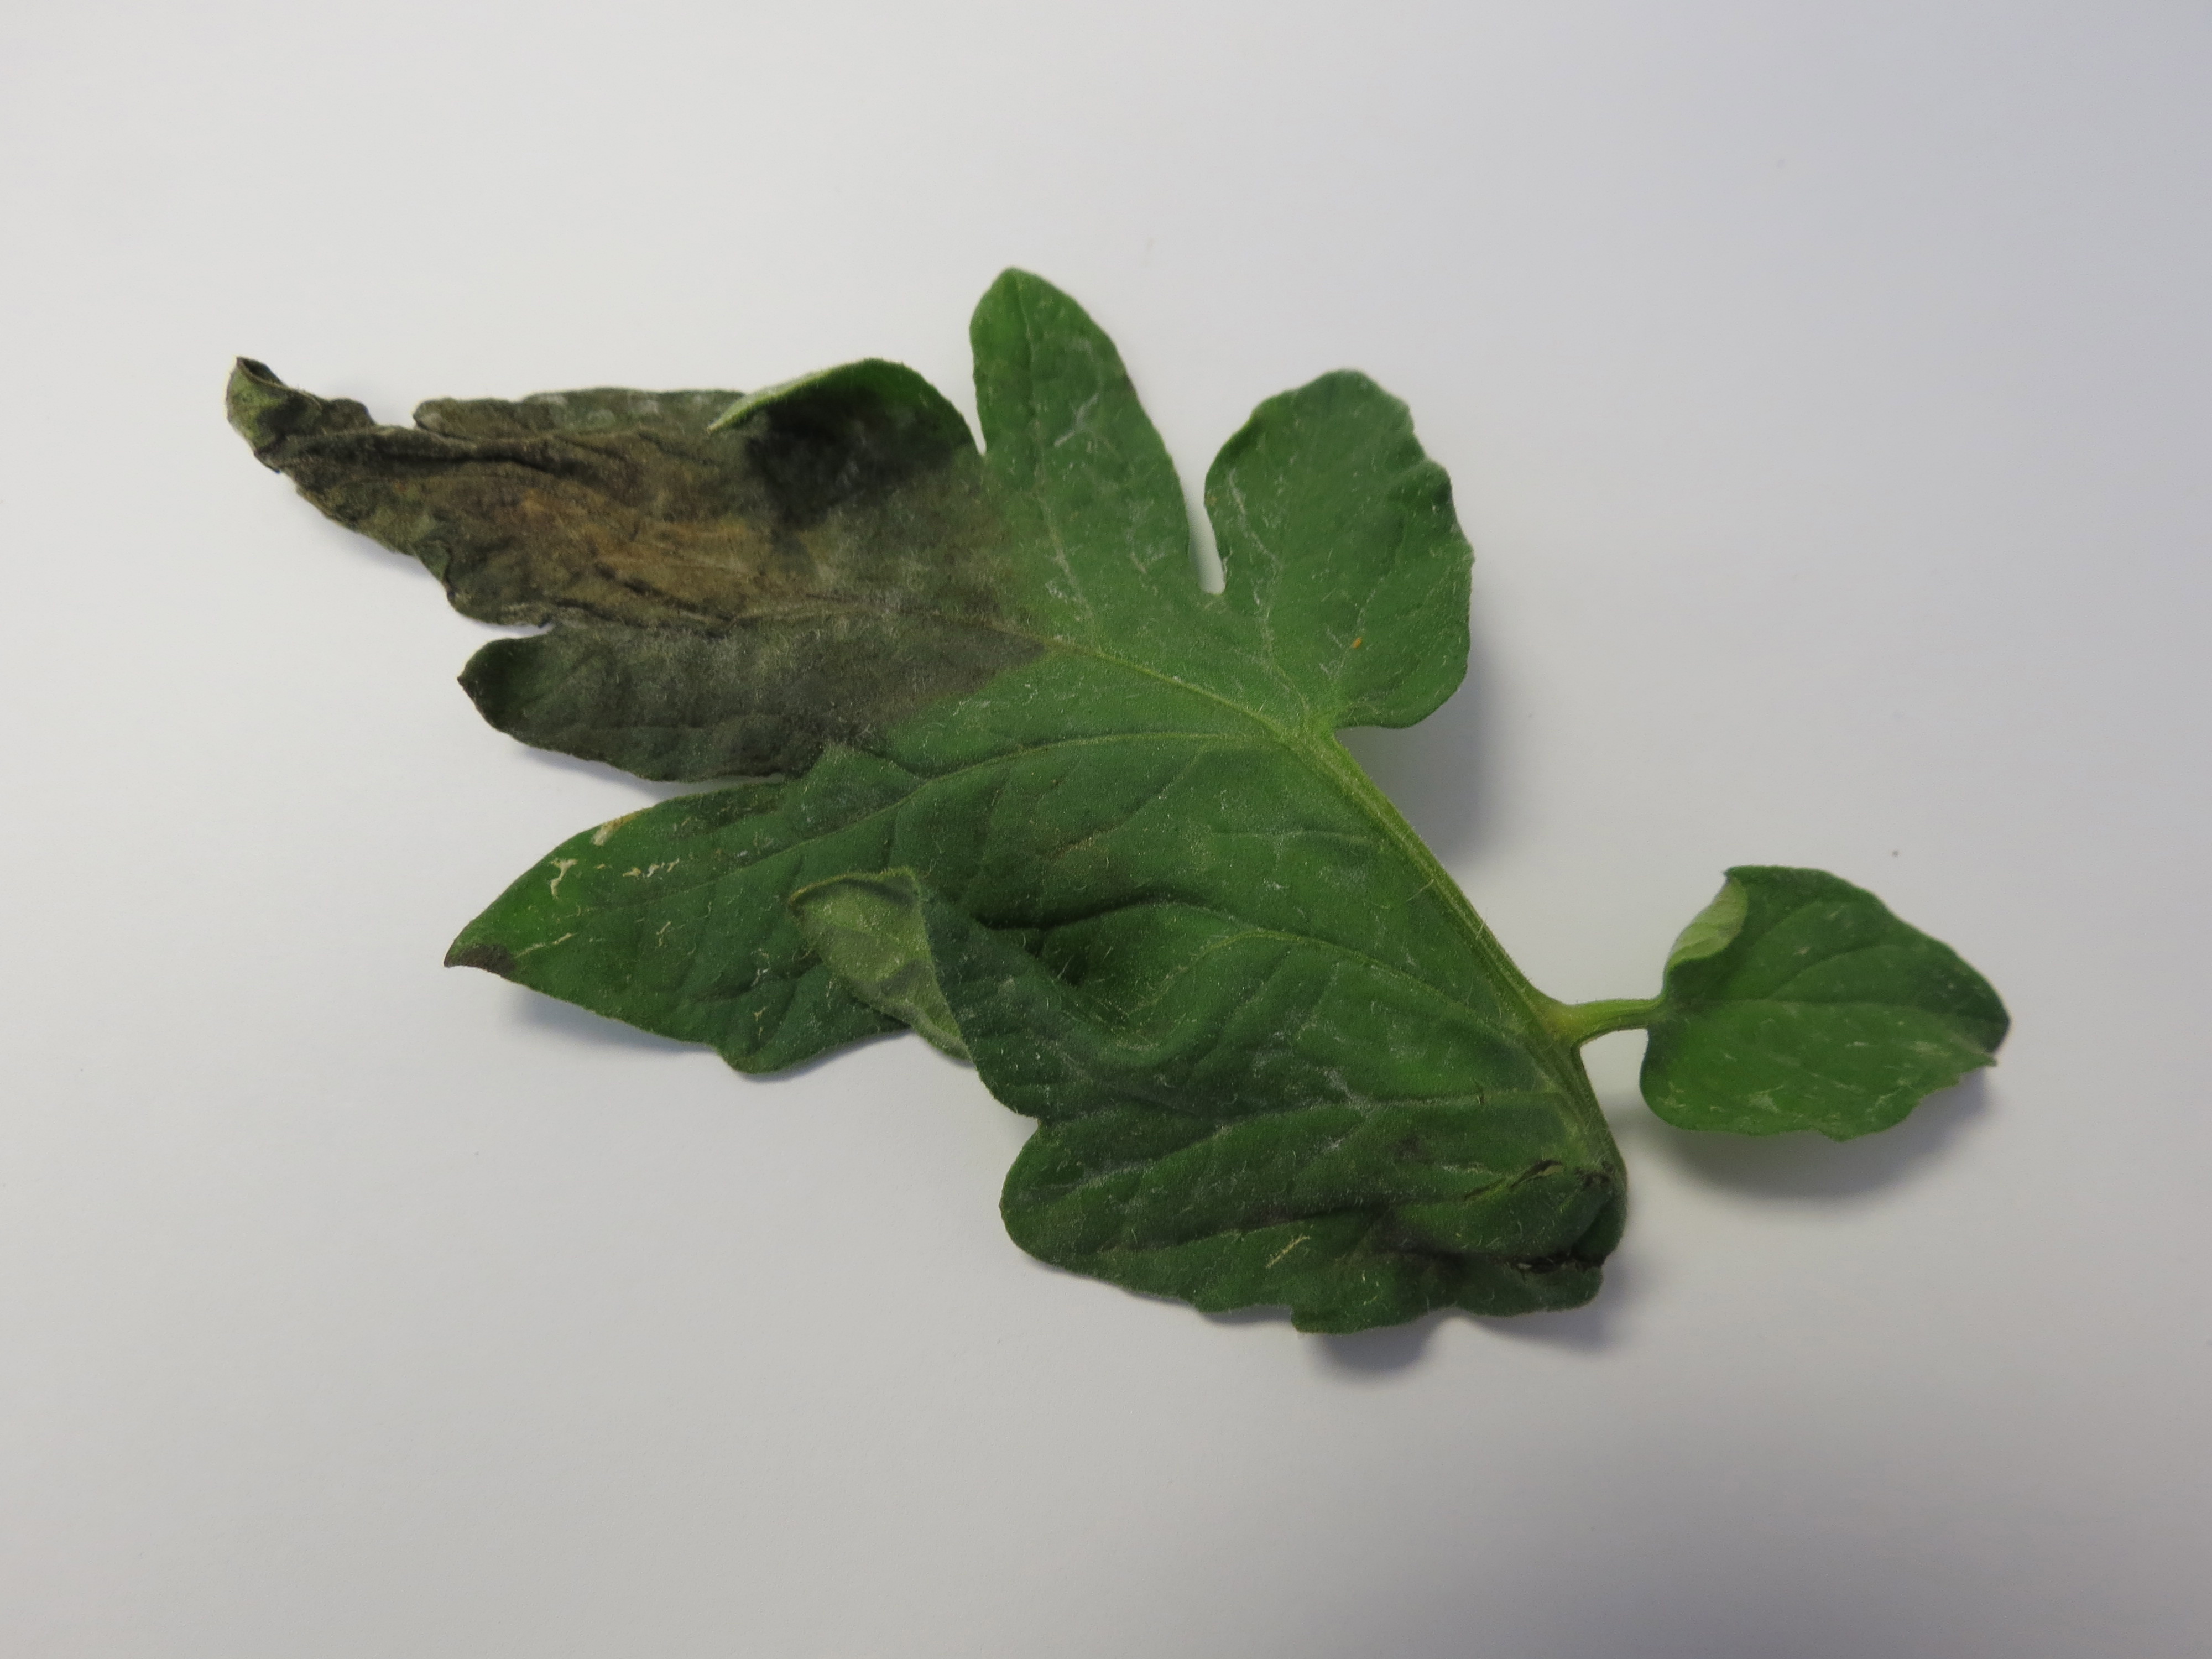 Late blight on tomato leaf (Photo Lina Quesada, NCSU vegetable pathology)